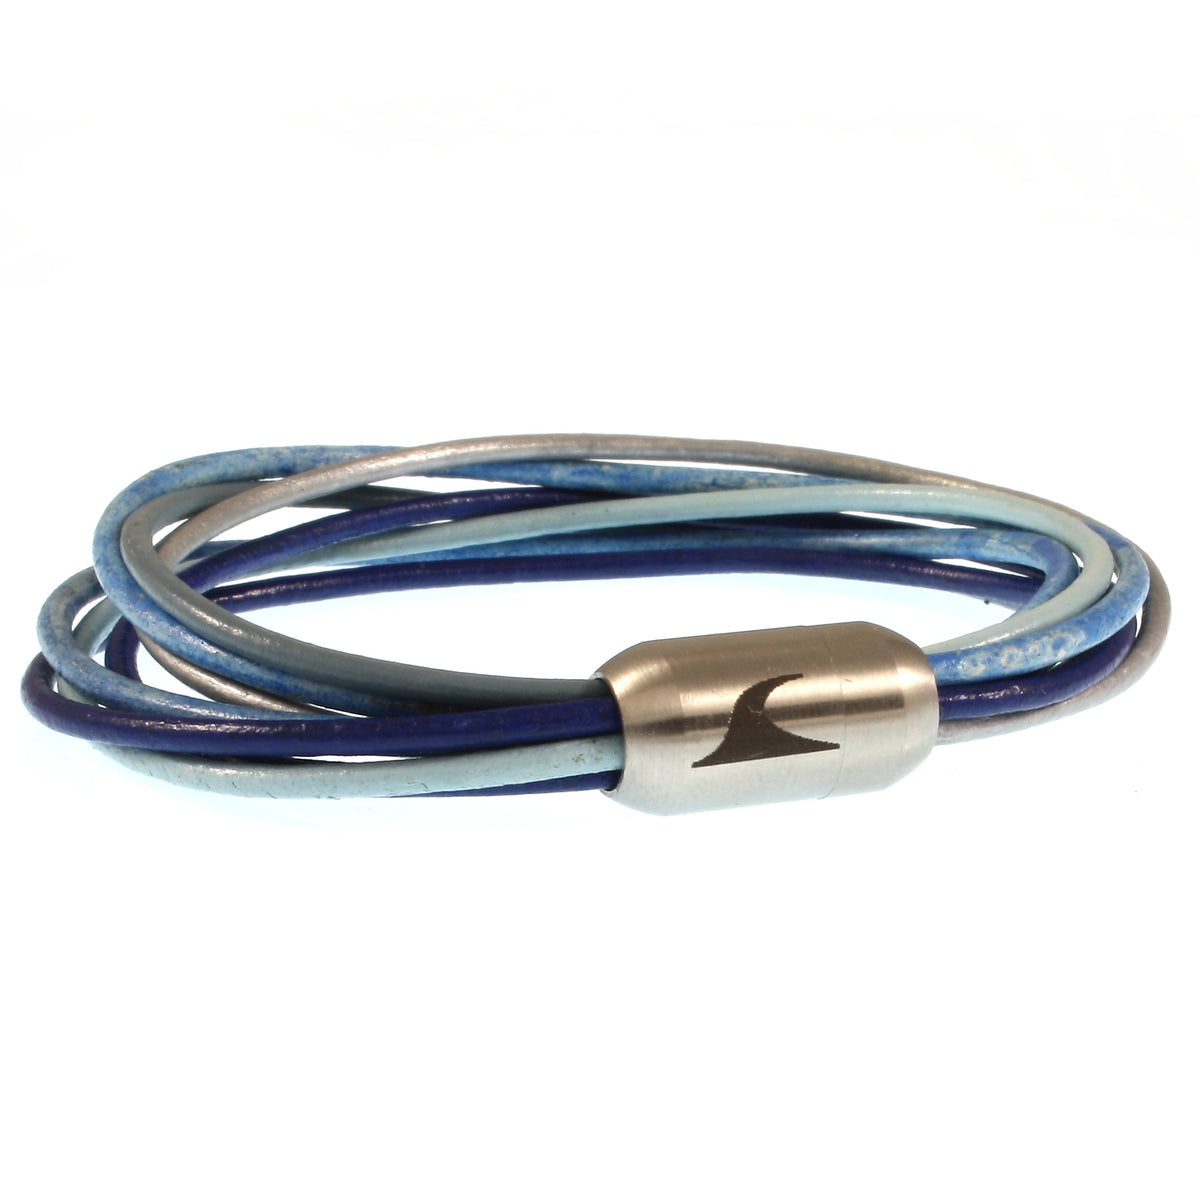 Damen-Leder-armband-fem-ocean-marine-blau-hellblau-multicolor-silber-Edelstahlverschluss-vorn-wavepirate-shop-r